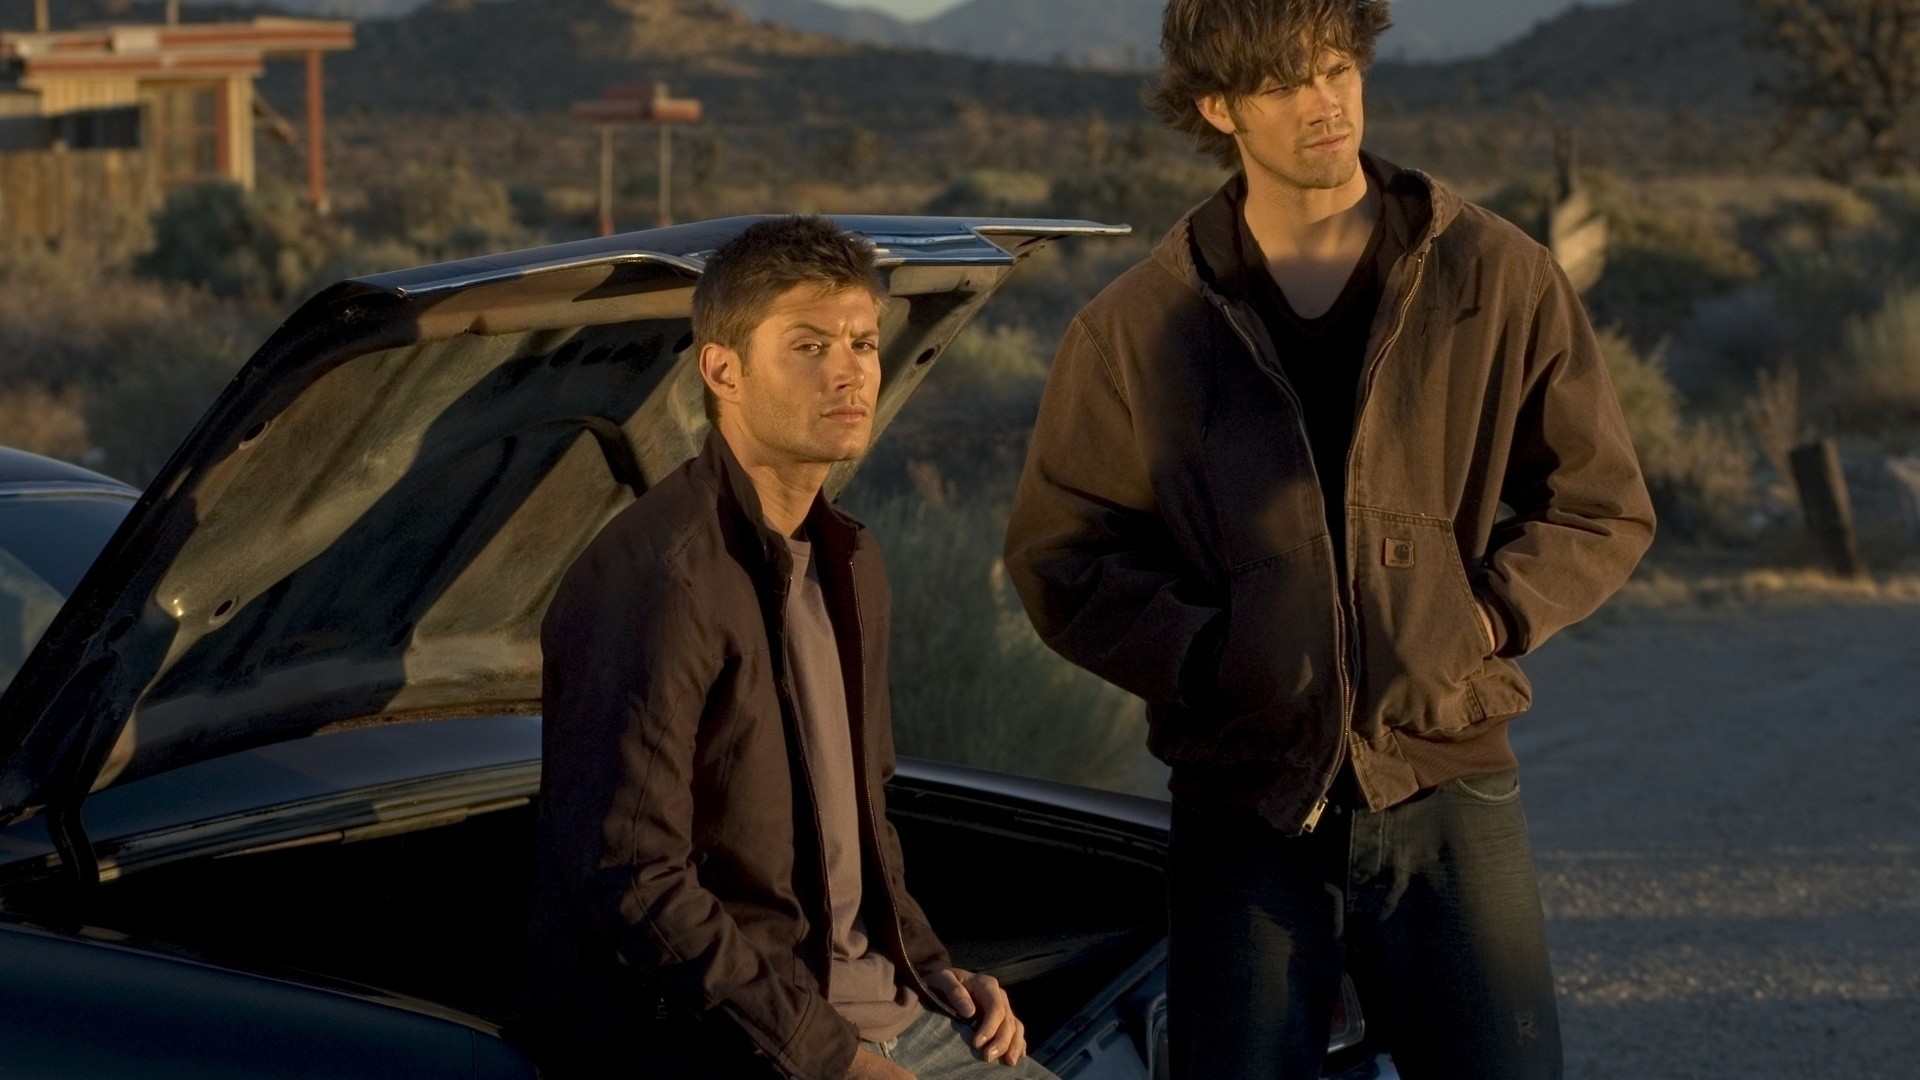 So young Dean and Sam Winchester Supernatural #spn #dean #sam #impala #